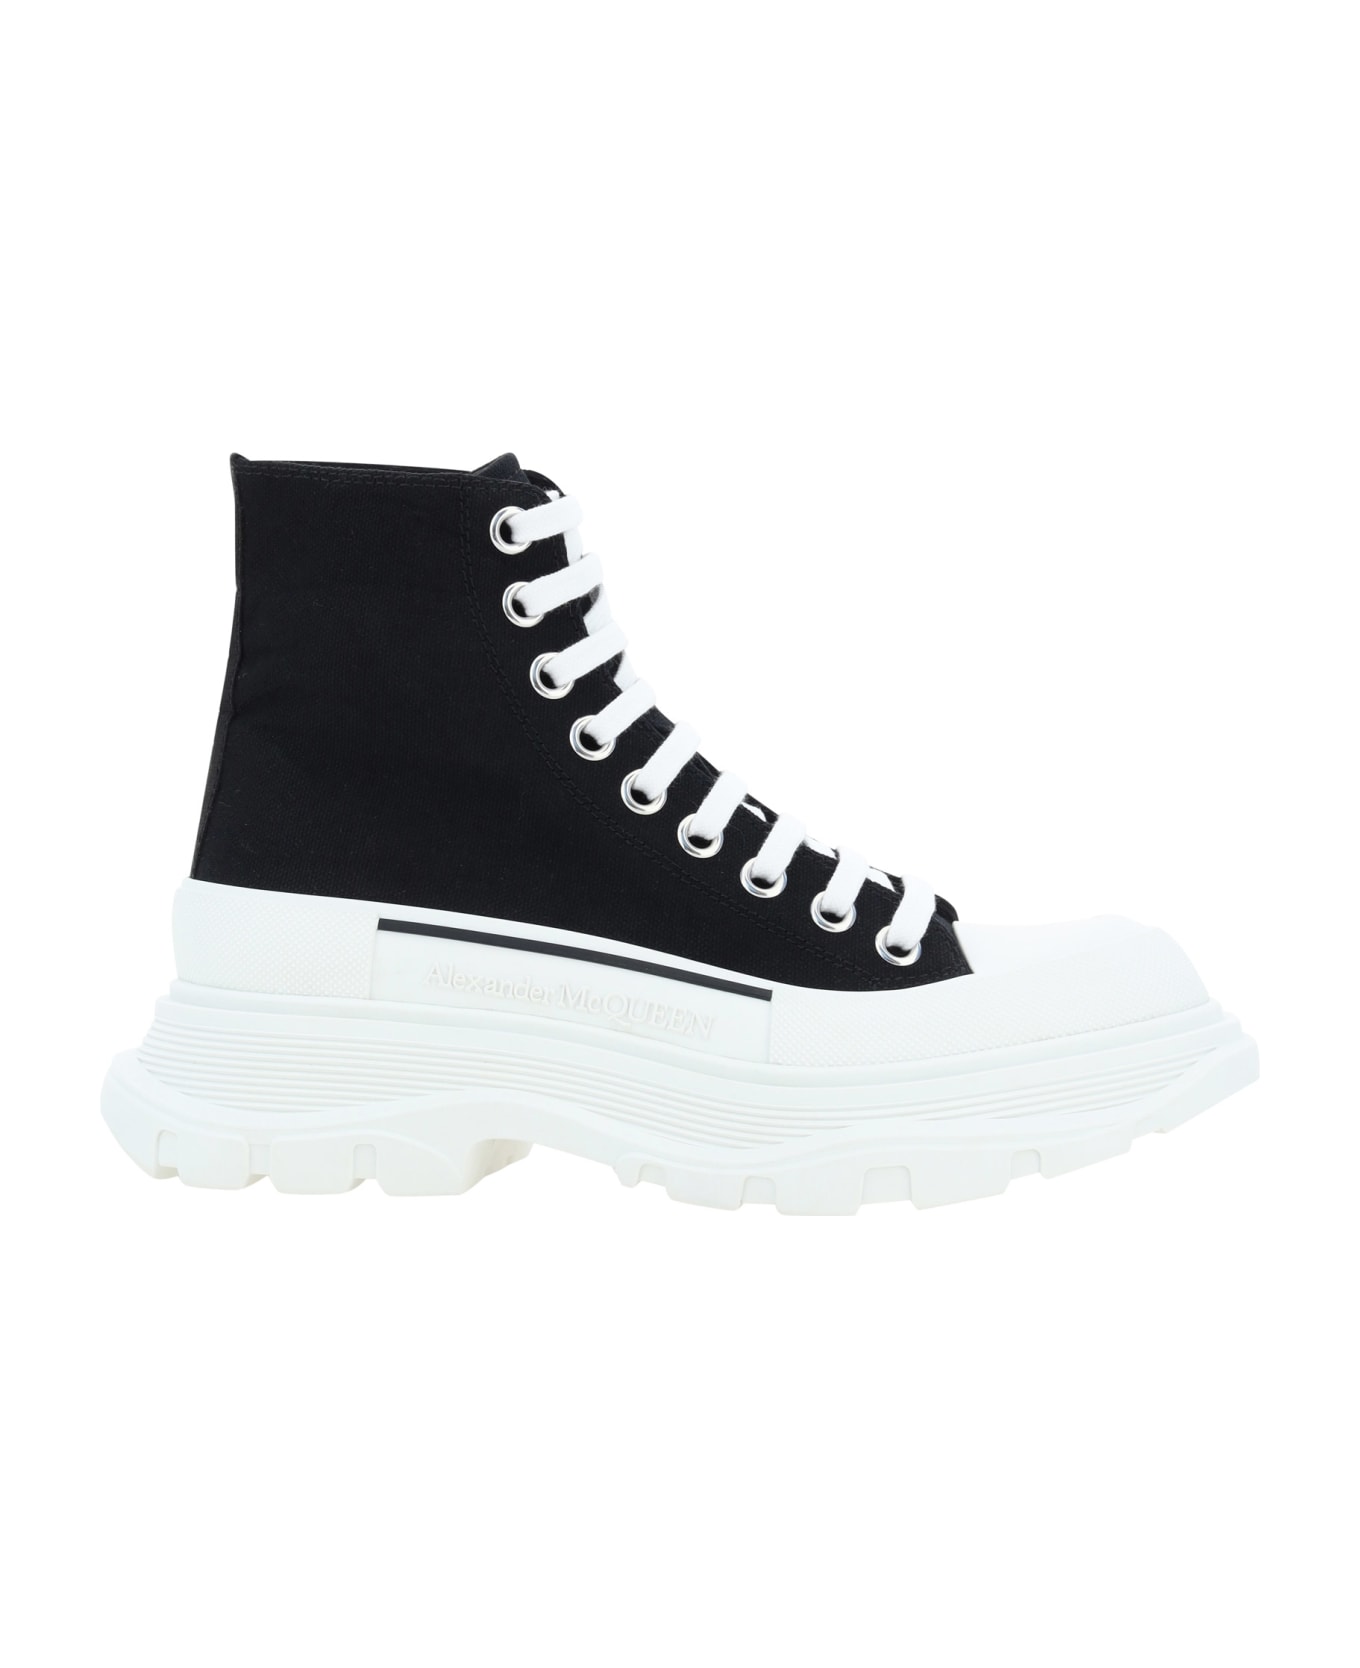 Alexander McQueen Tread Slick Ankle Boots - Black/white スニーカー